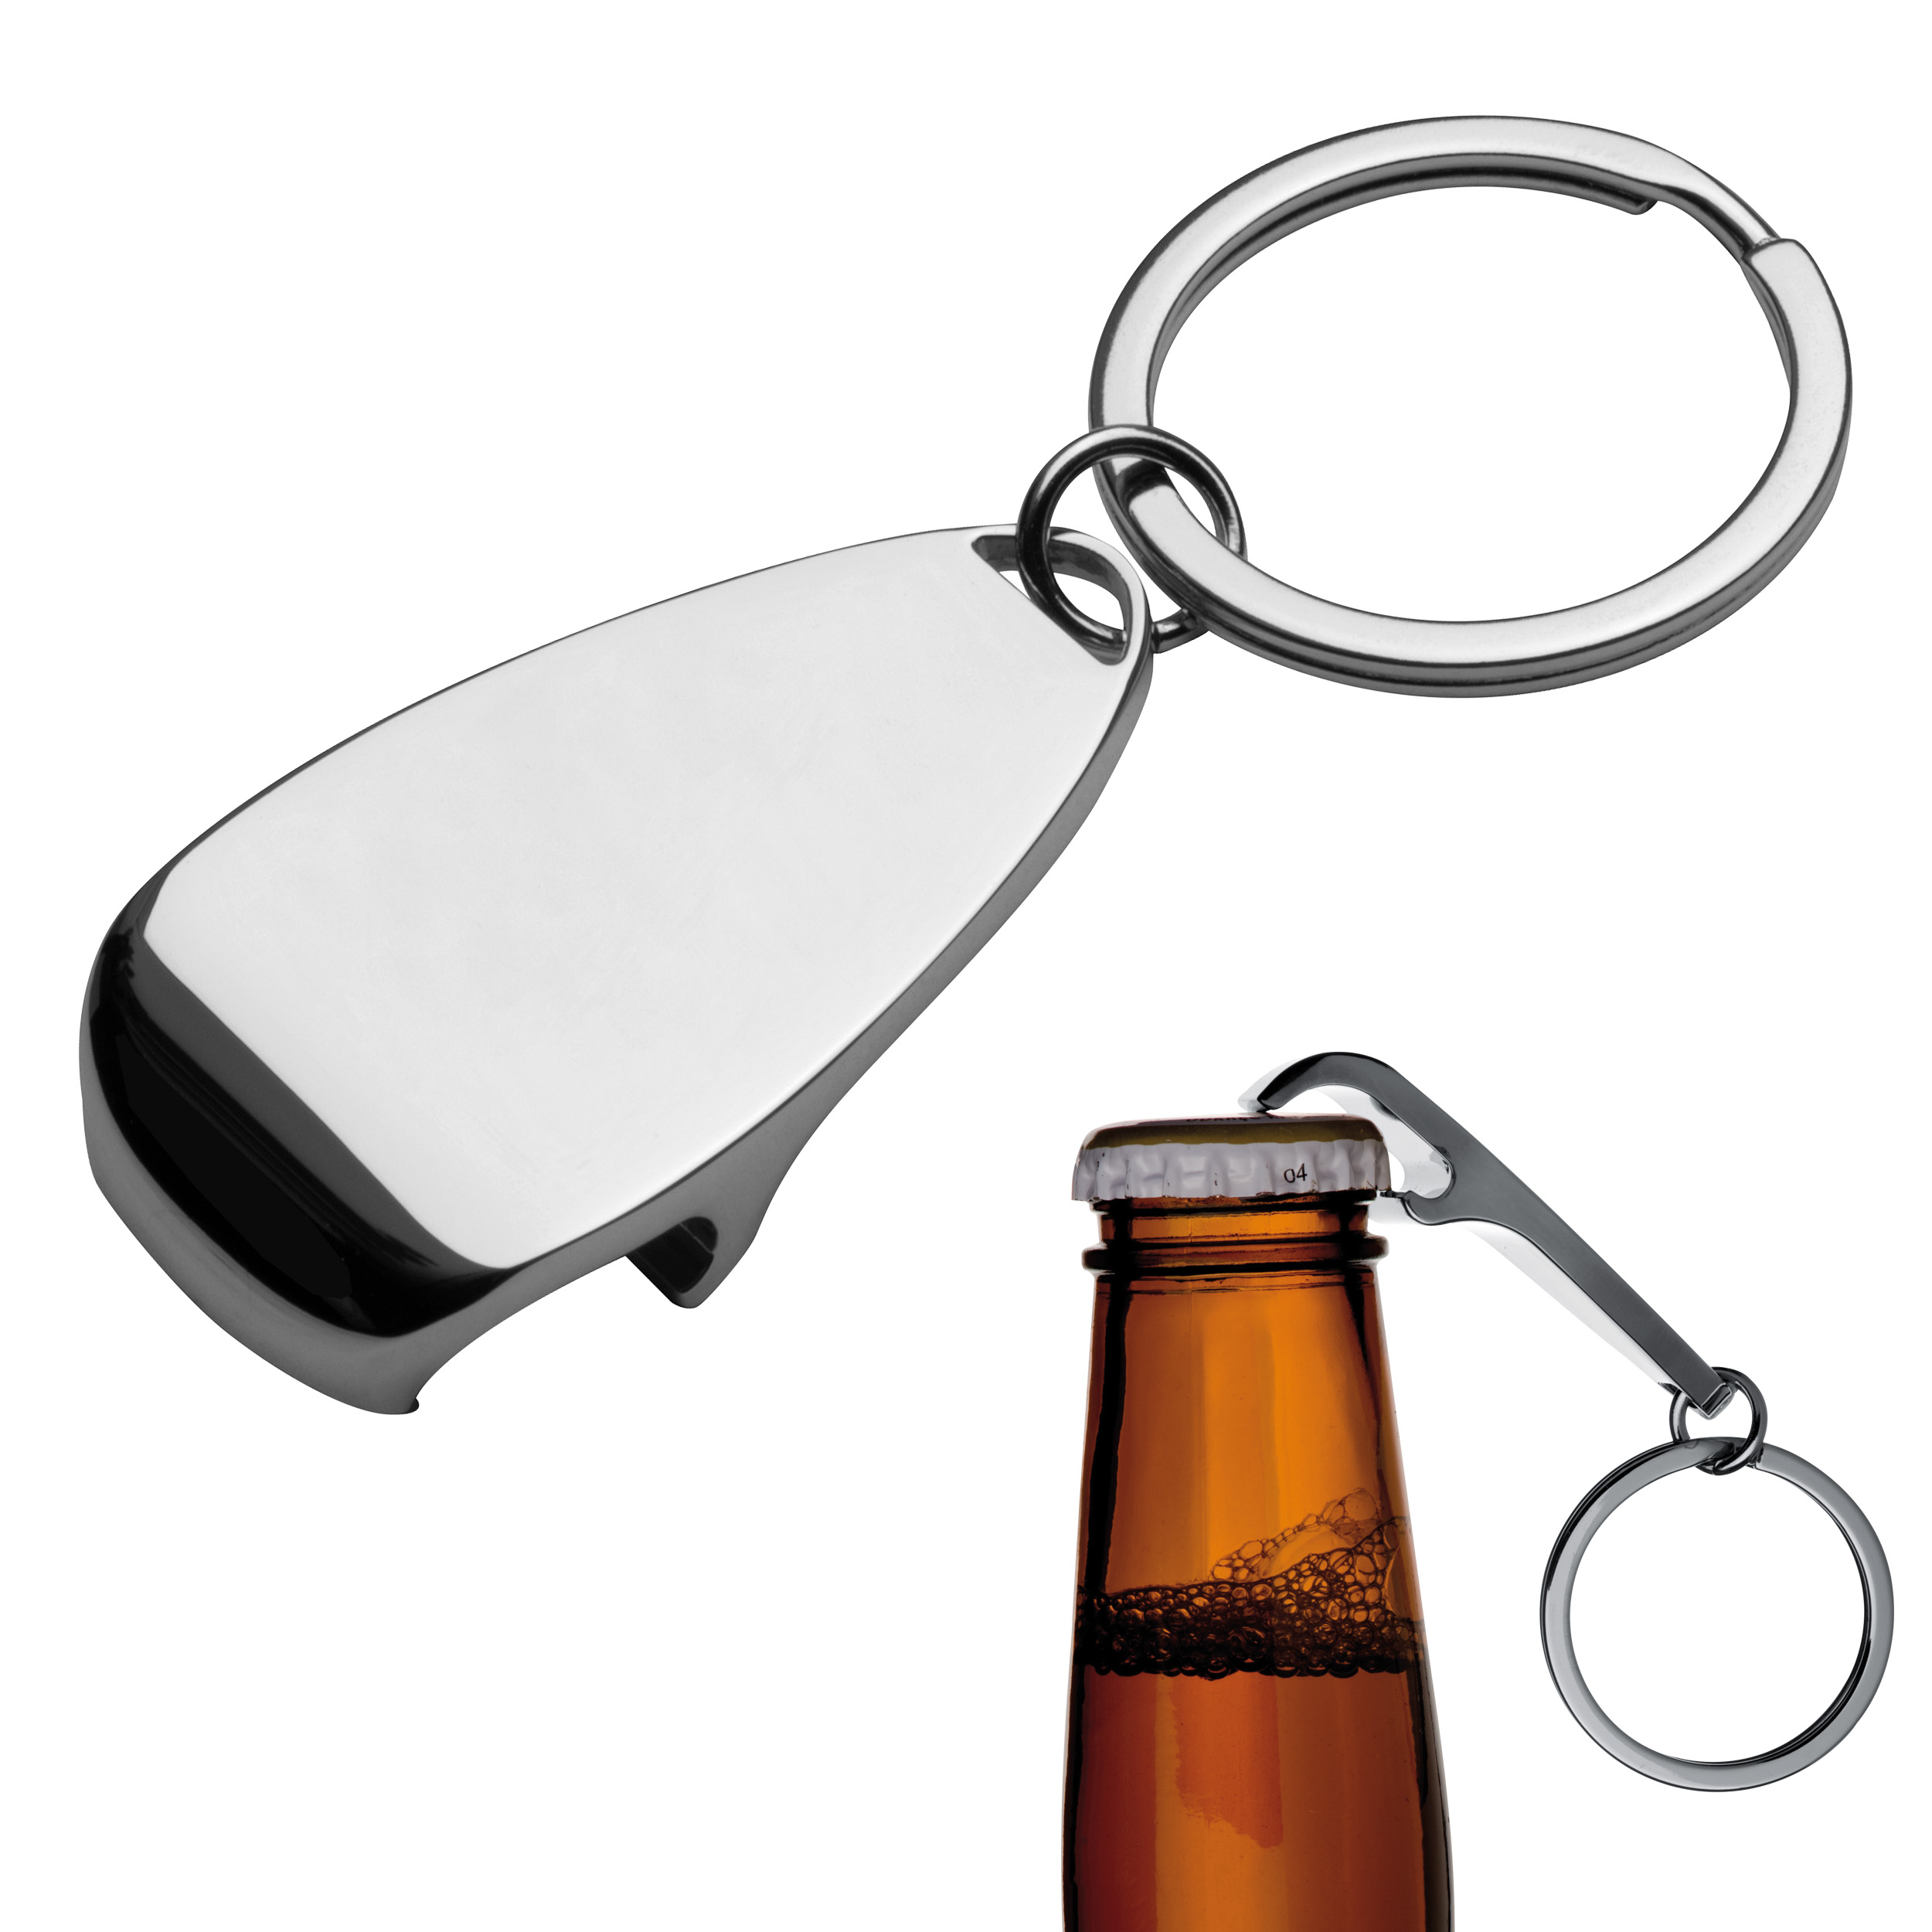 Metal keyring with bottle opener